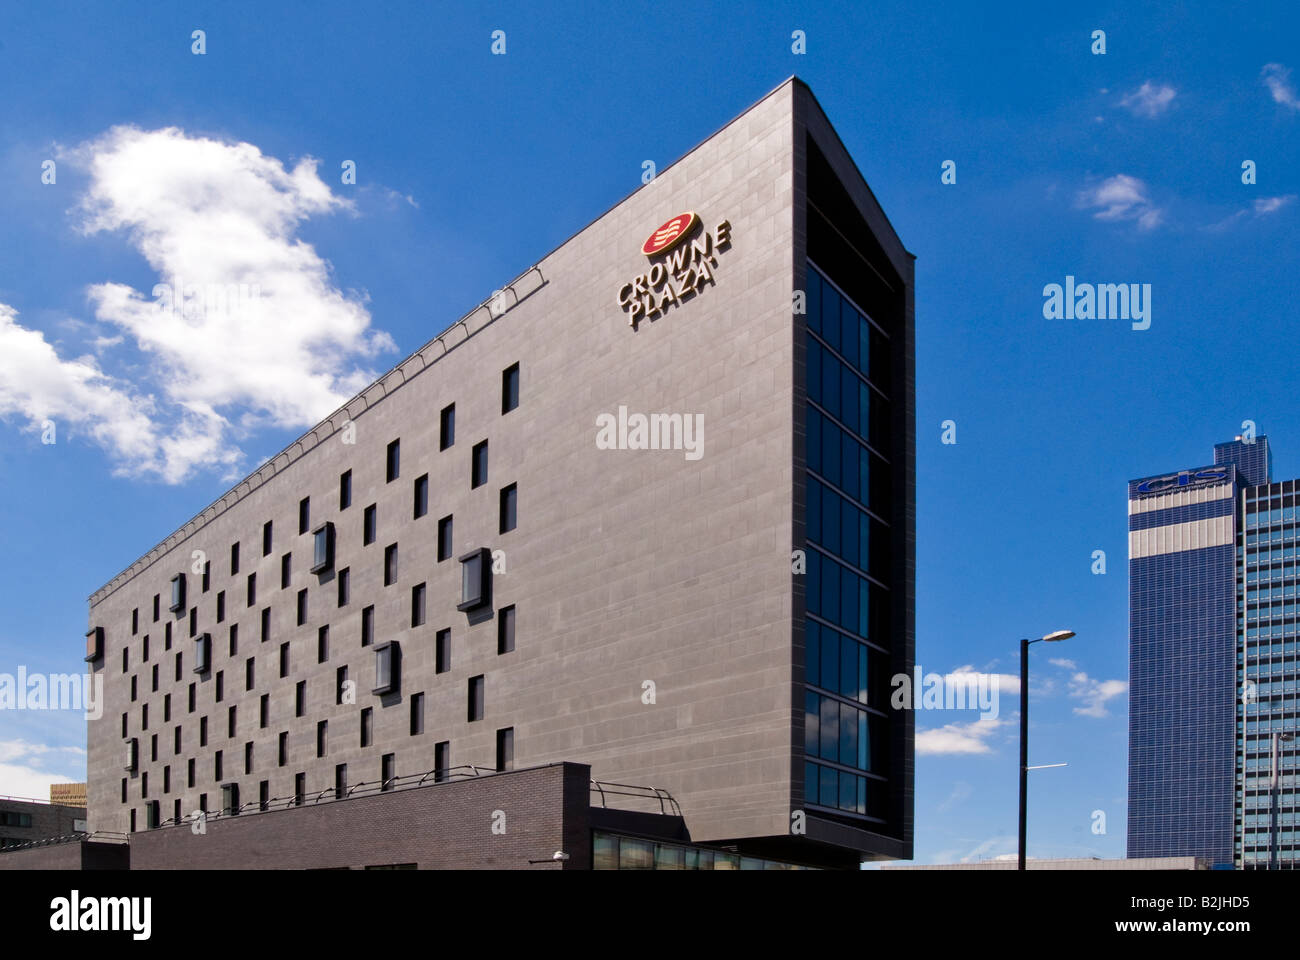 The Crowne Plaza Hotel, Manchester, England, UK Stock Photo